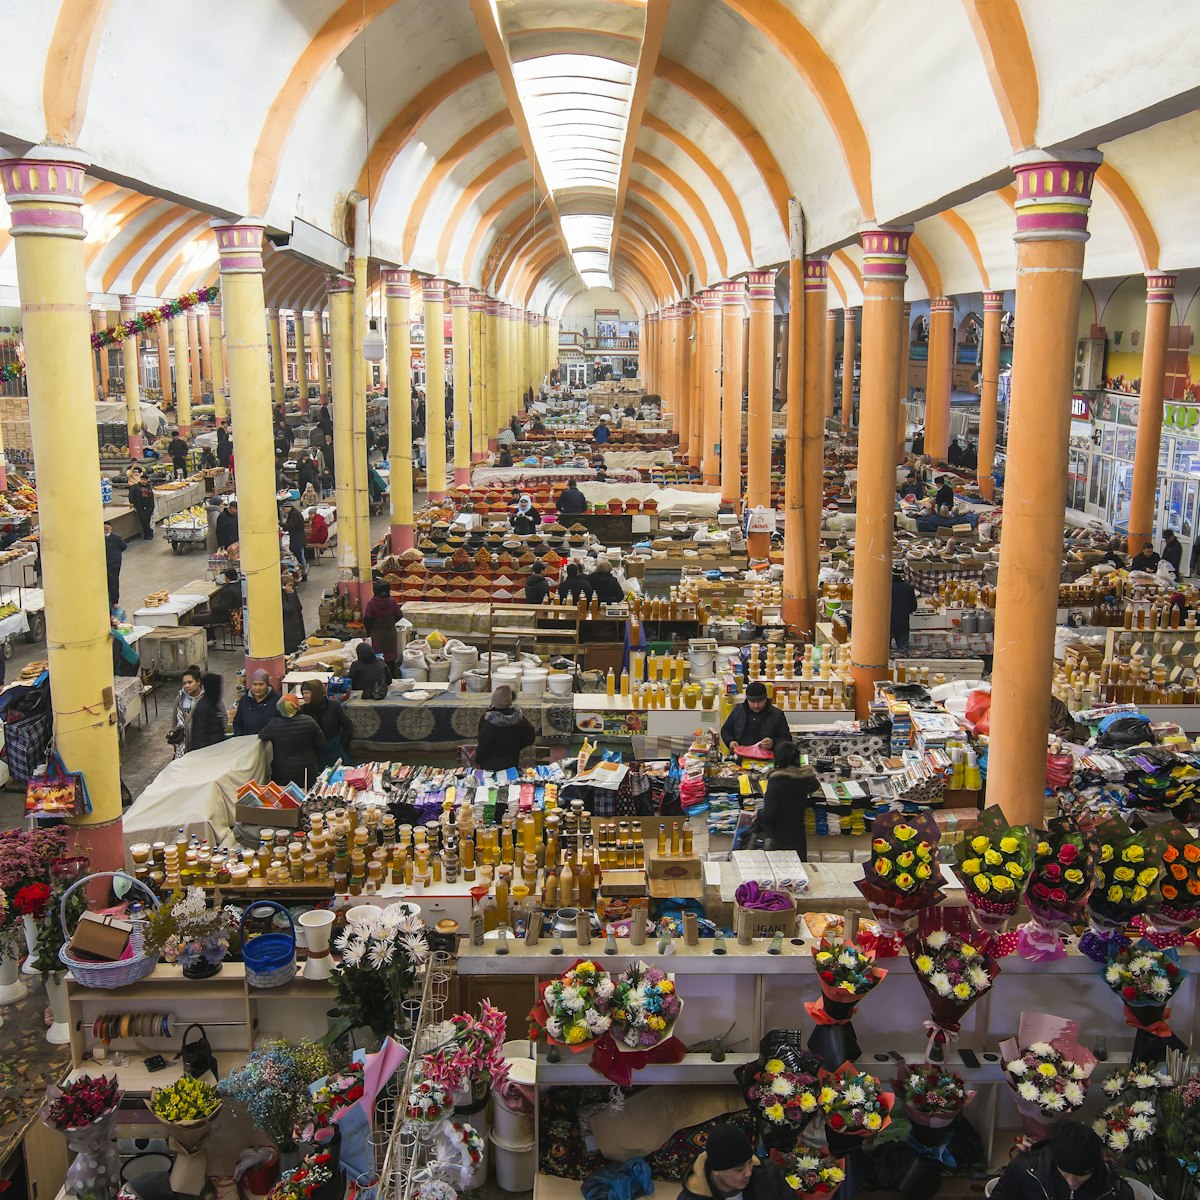 The interior of Panjshanbe market in Khujand, Tajikstan.